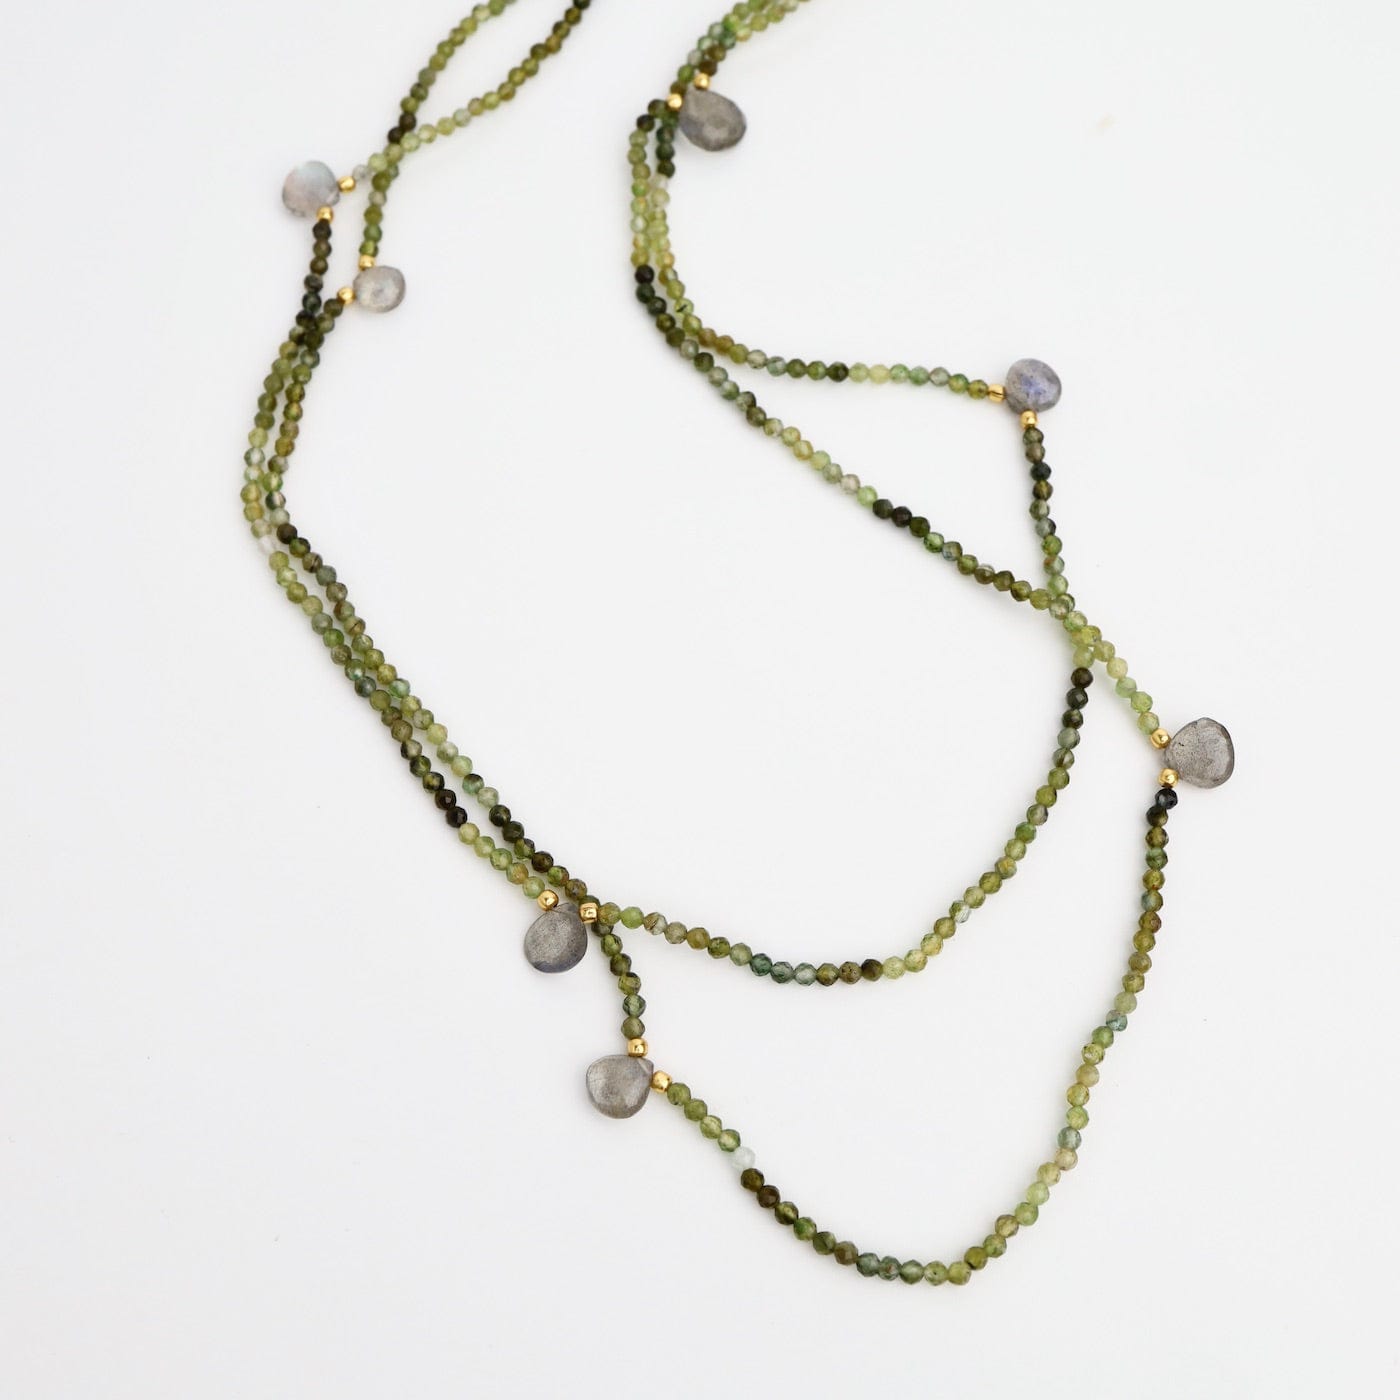 NKL-GPL Green Tourmaline & Labradorite Long Necklace